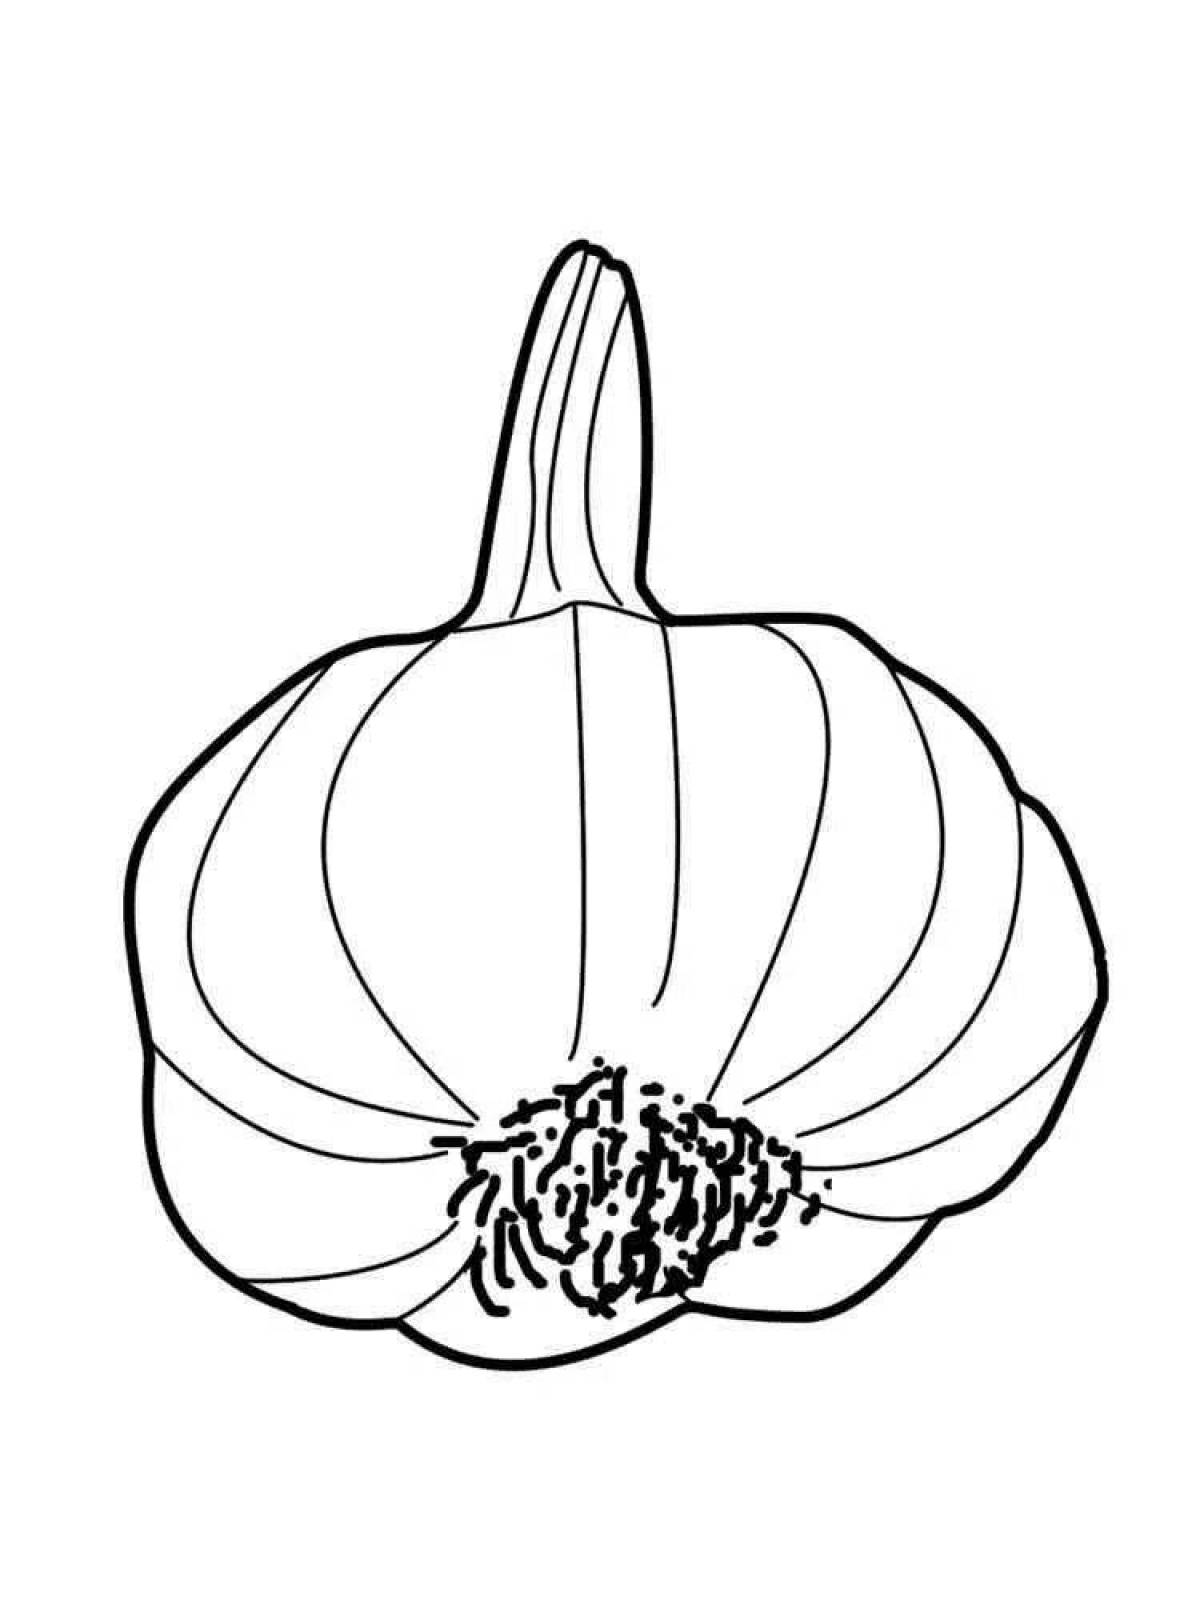 Detailed garlic coloring page